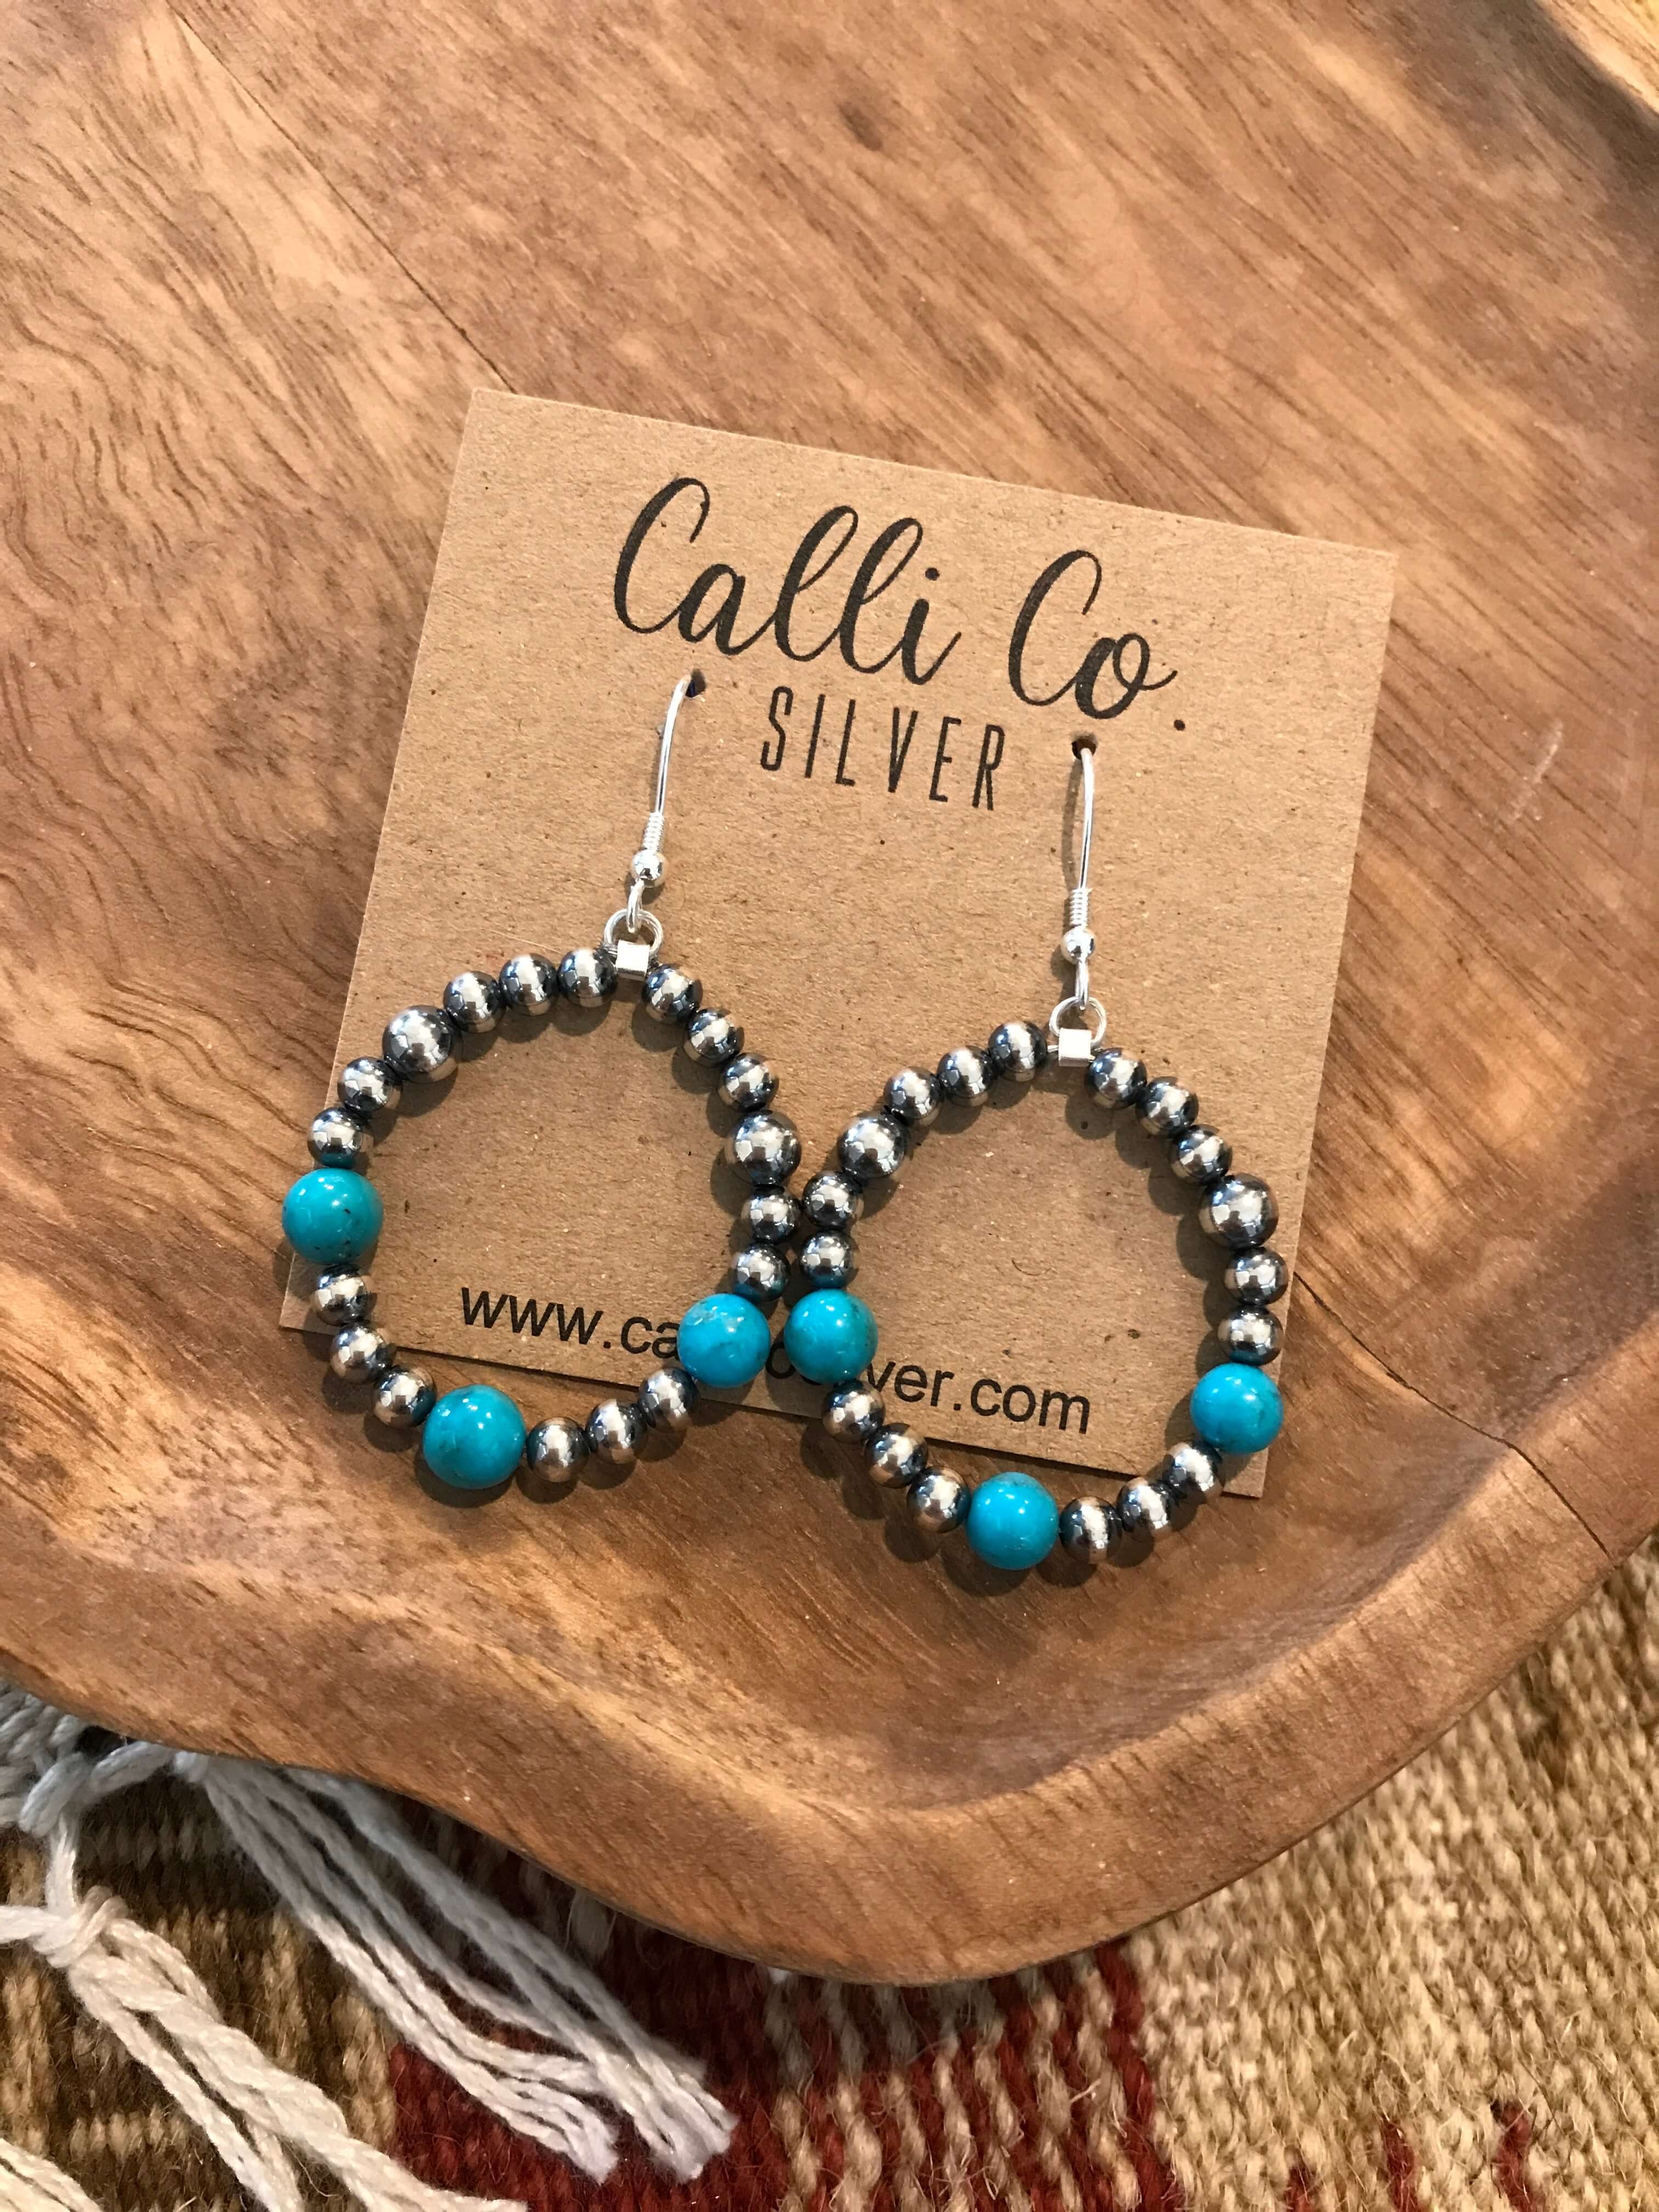 Shop Navajo Pearl Earrings | Calli Co. Silver | Dennis, TX 